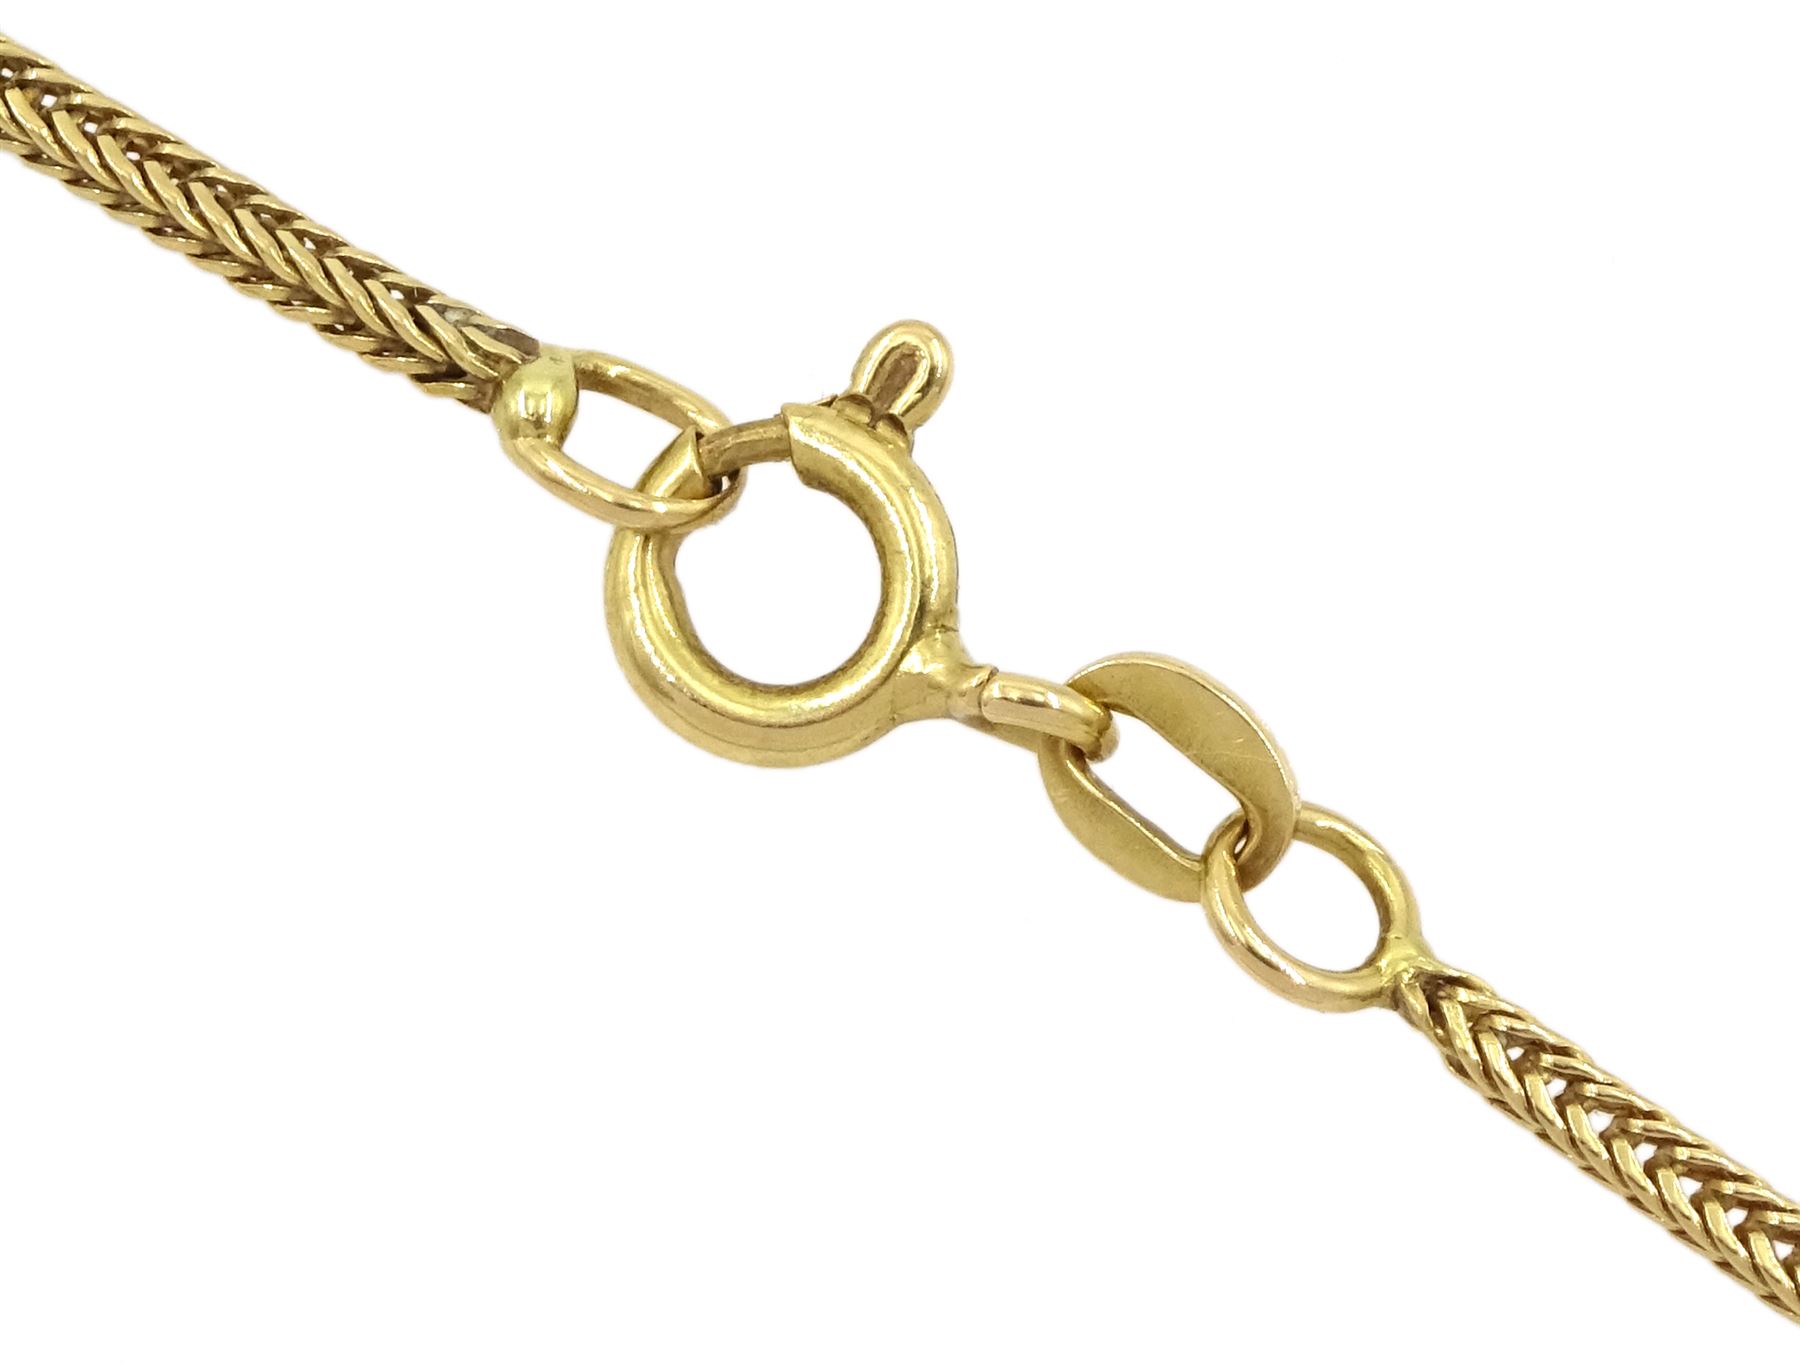 9ct gold locket pendant - Image 3 of 3